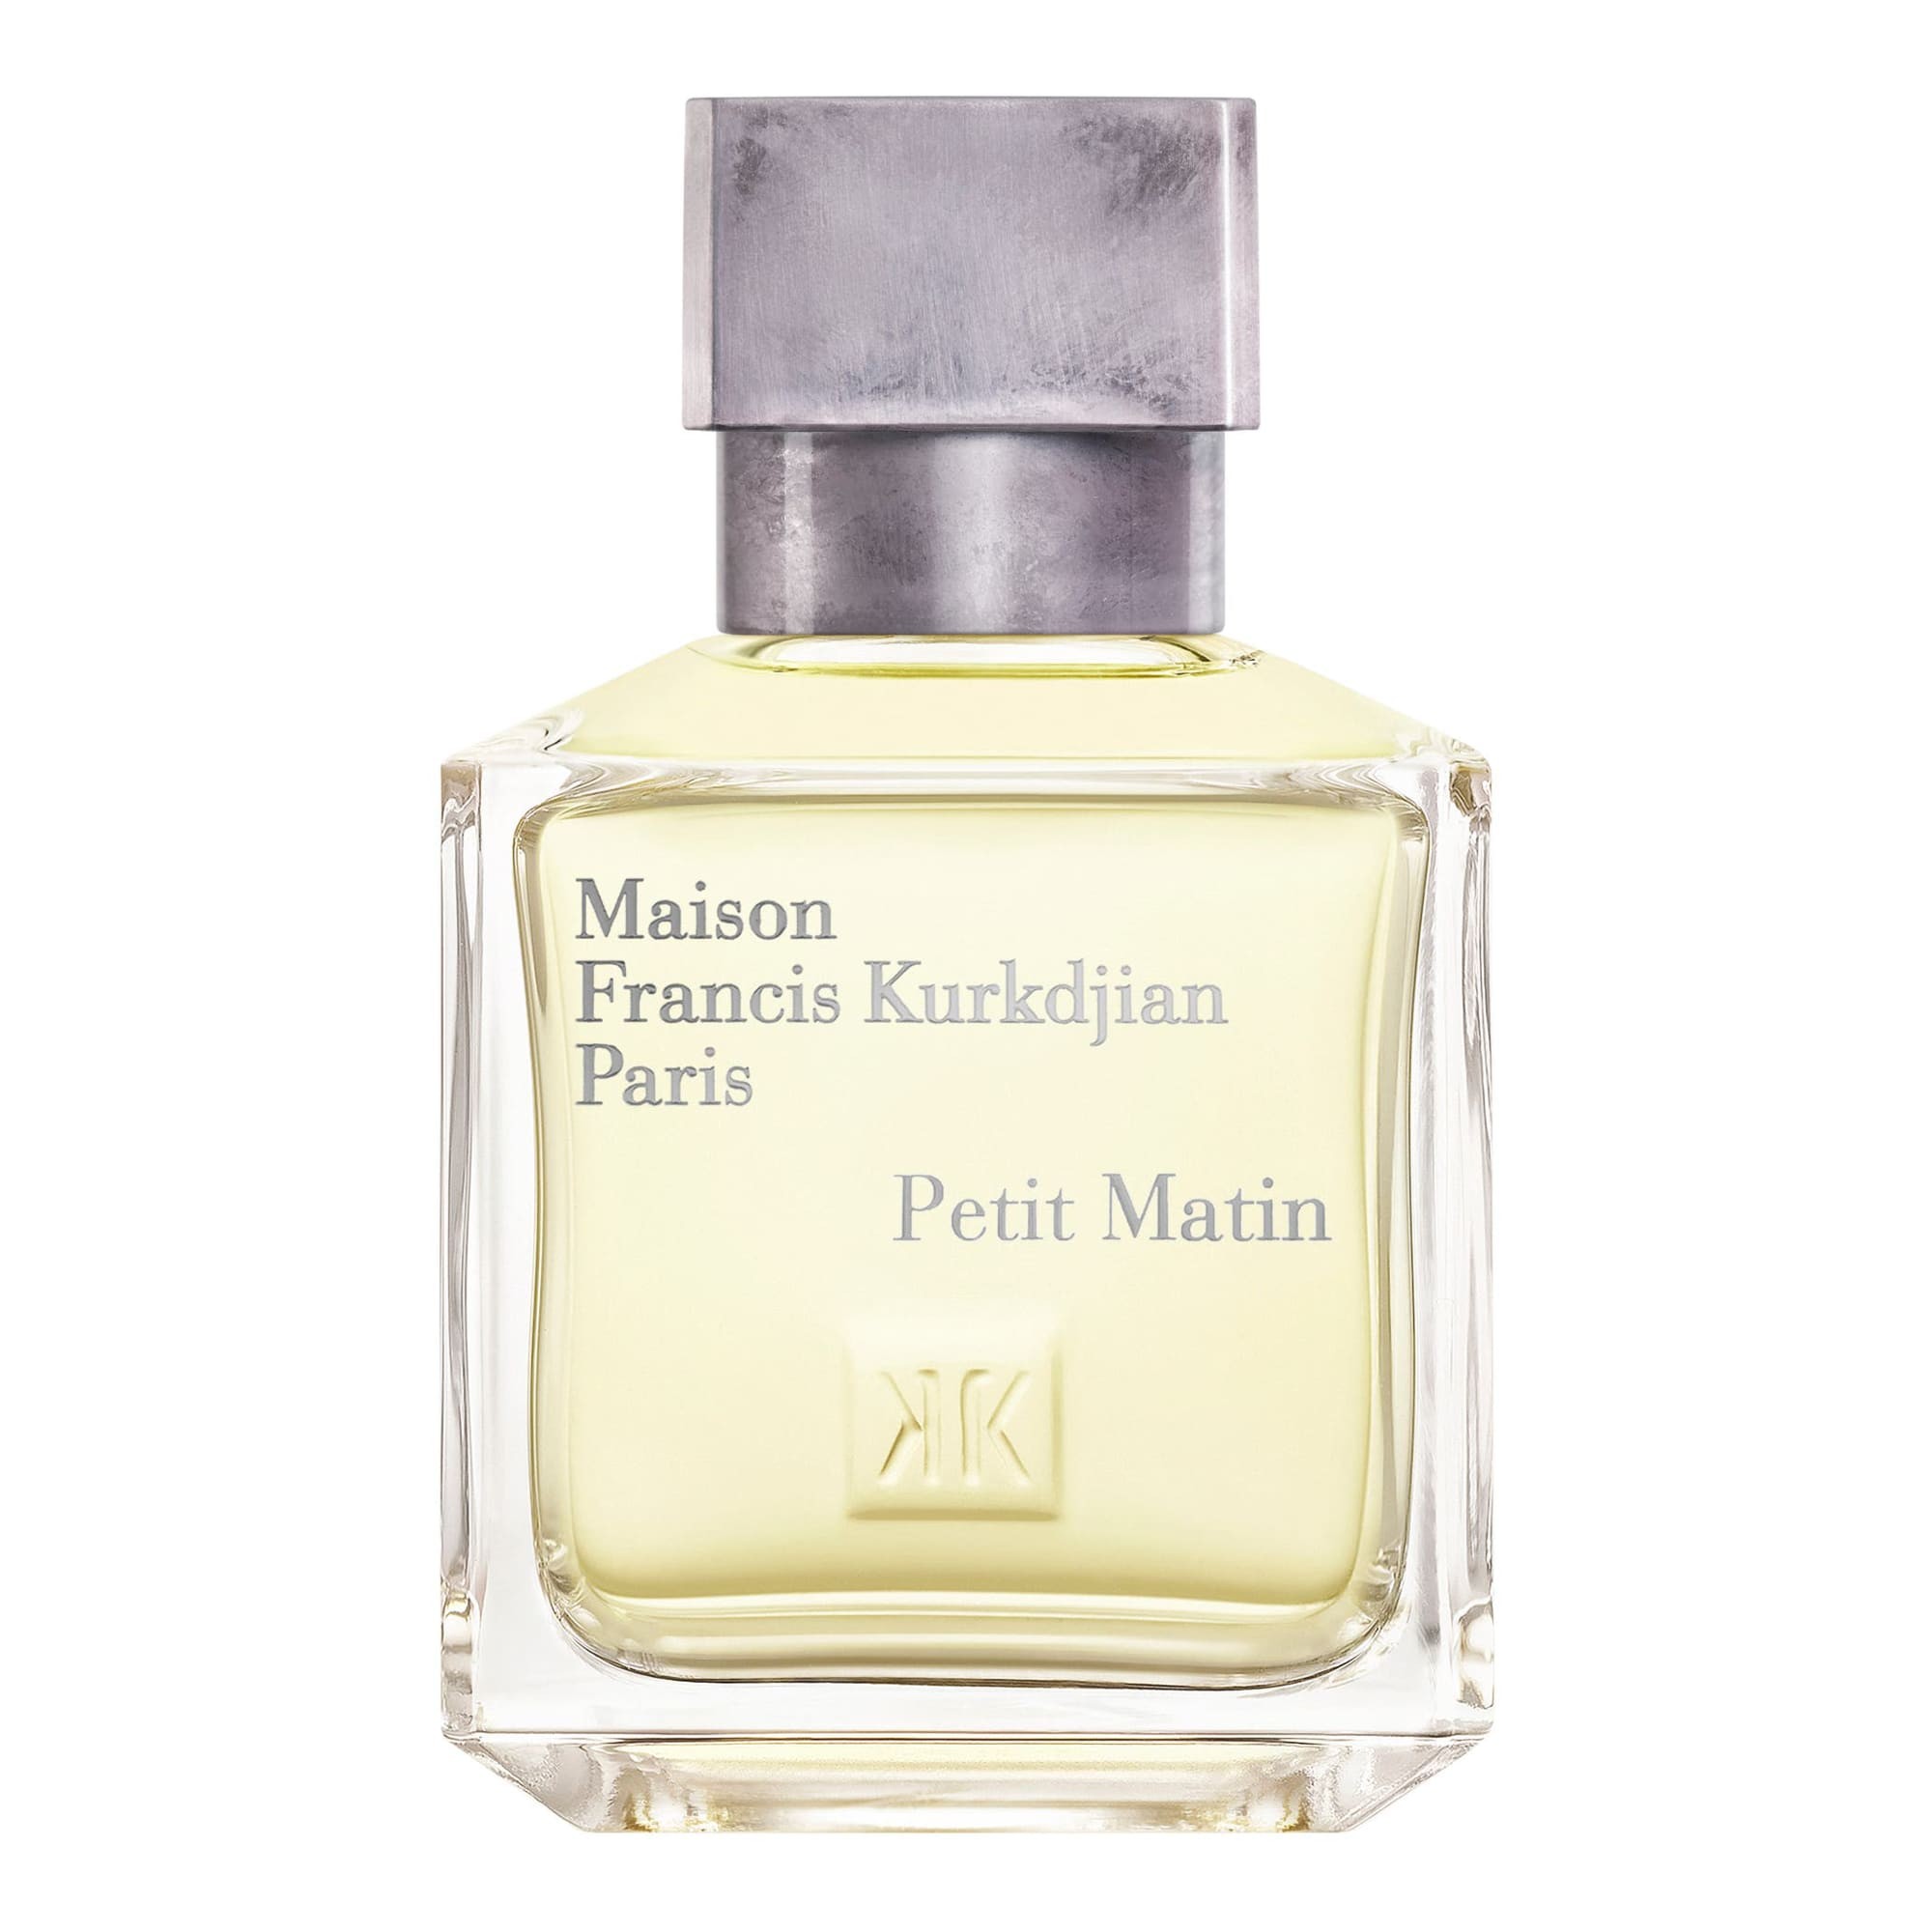 Maison Francis Kurkdjian Petit Matin Eau De Parfum 70 mL